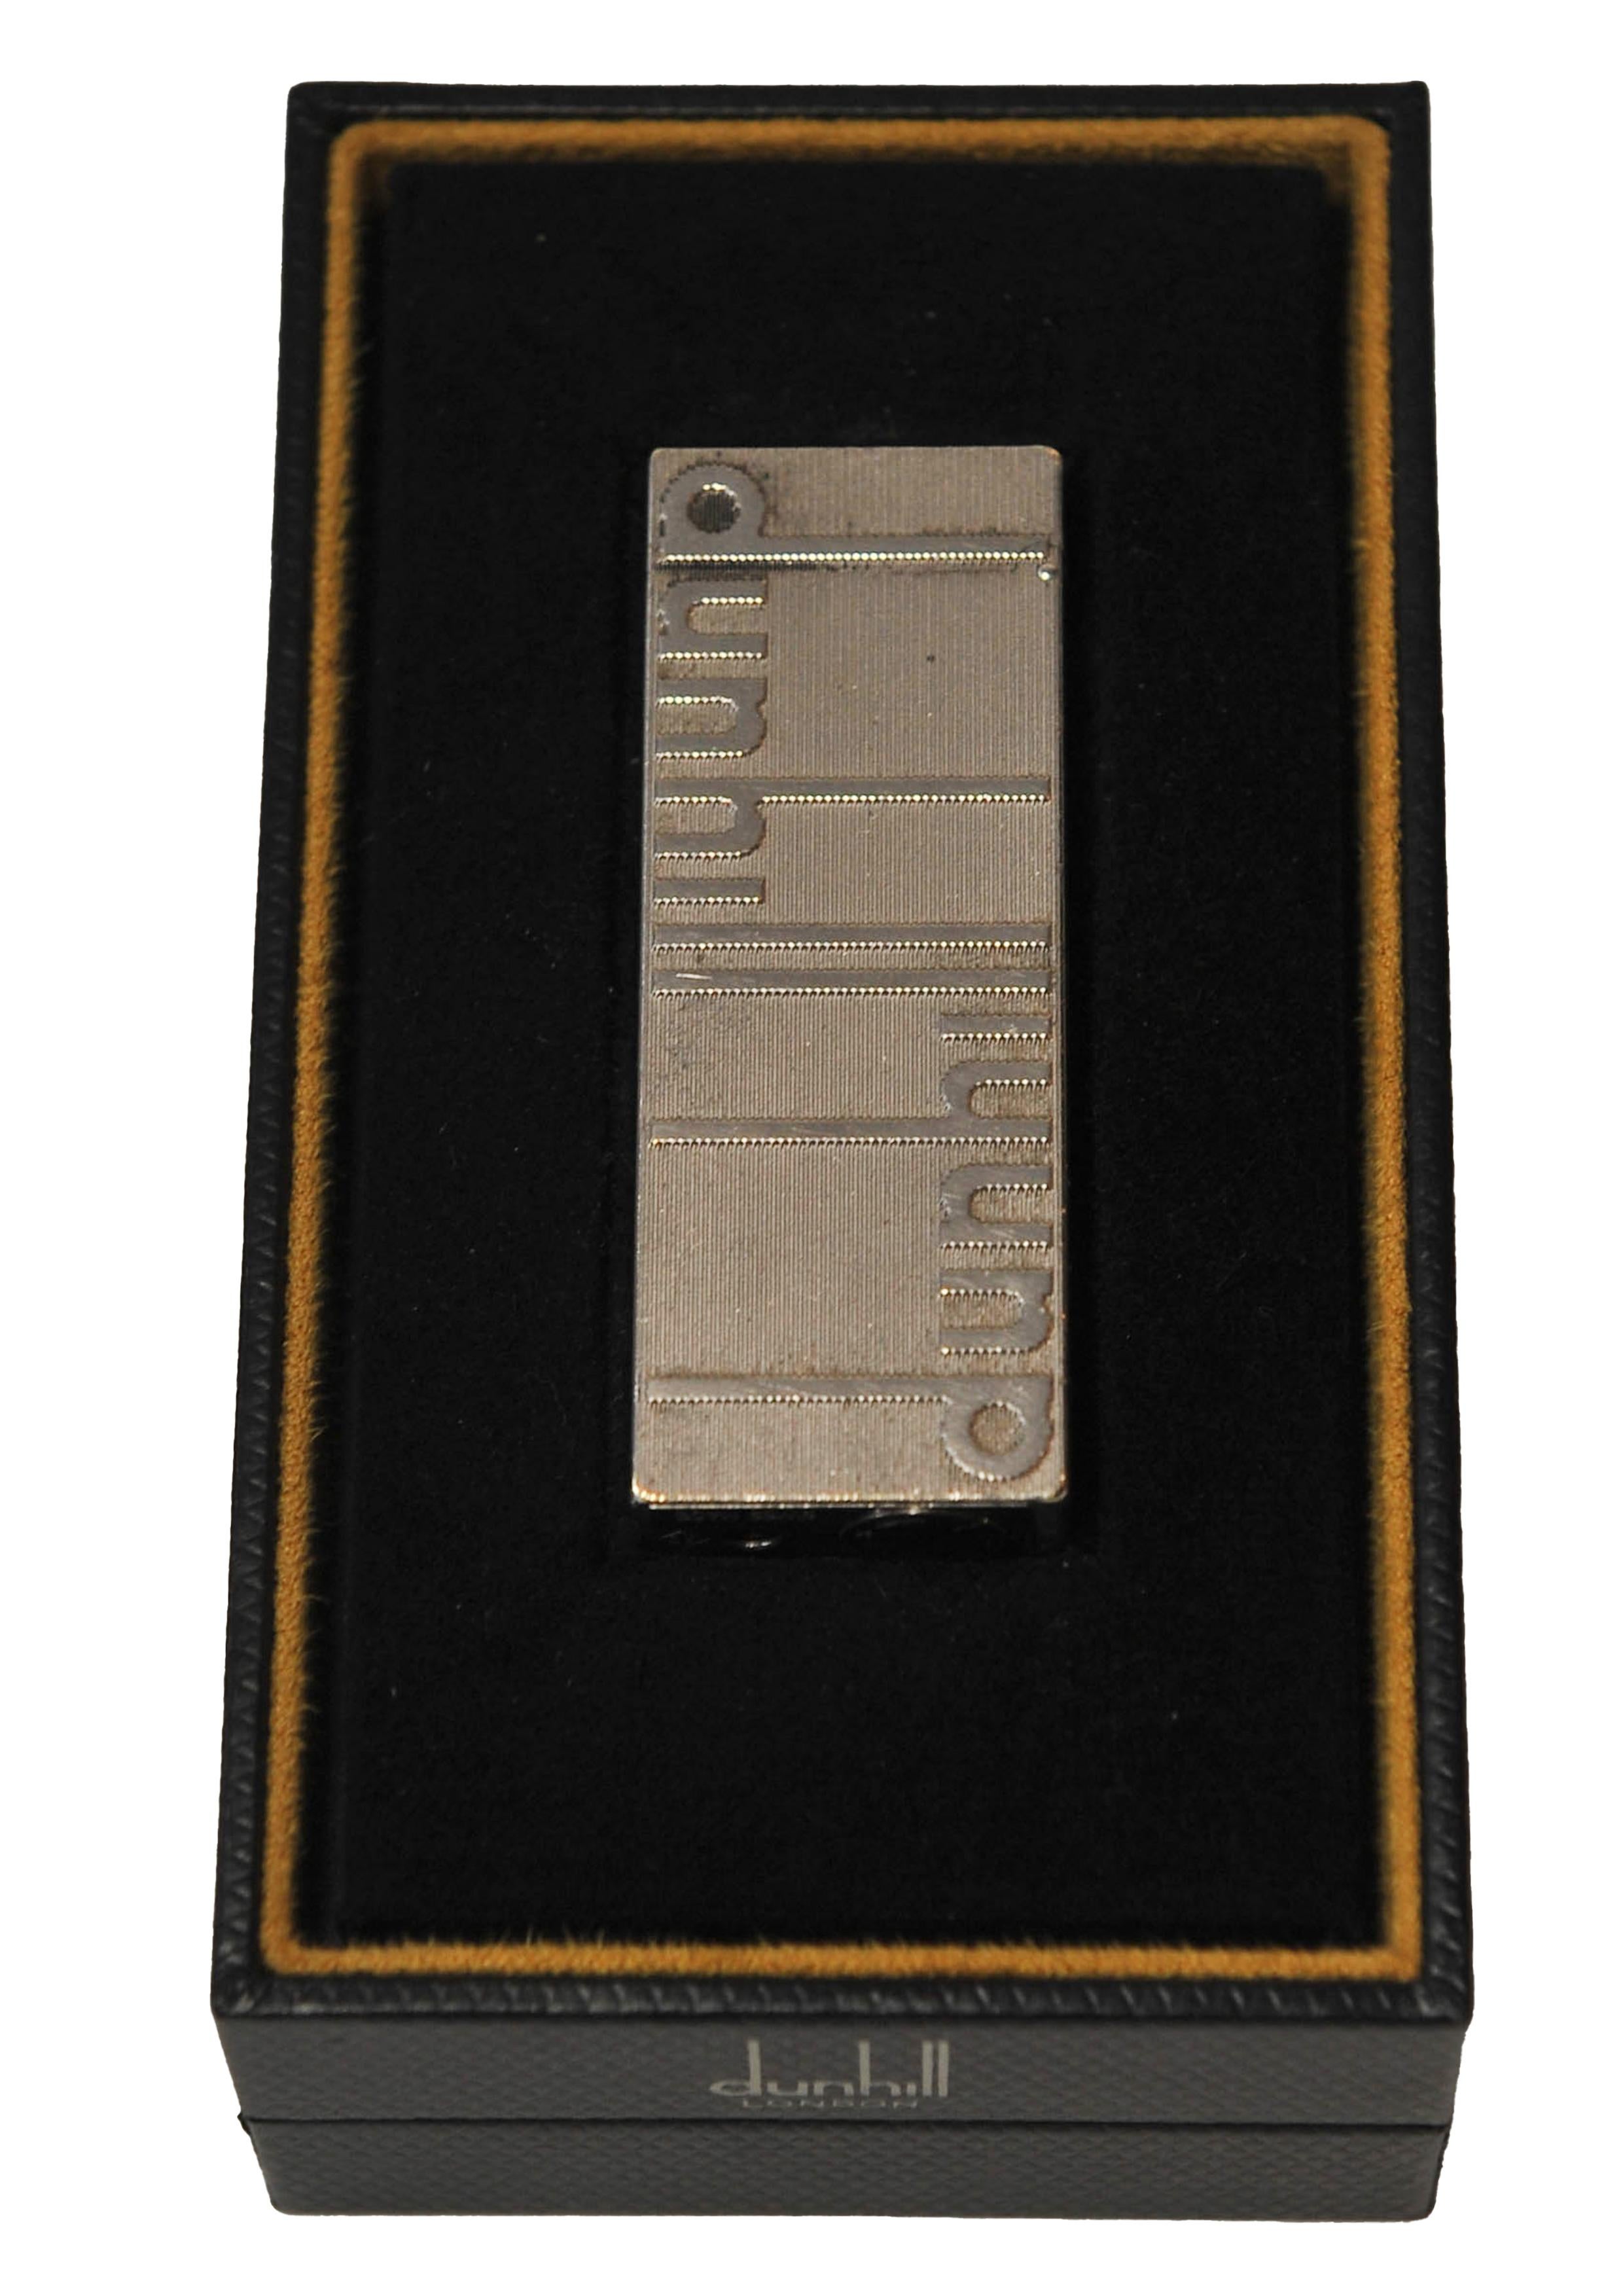 Dunhill of London Longtail Logo Rollgas Zigarettenfeuerzeug mit Dunhill-Schachtel (Art déco) im Angebot